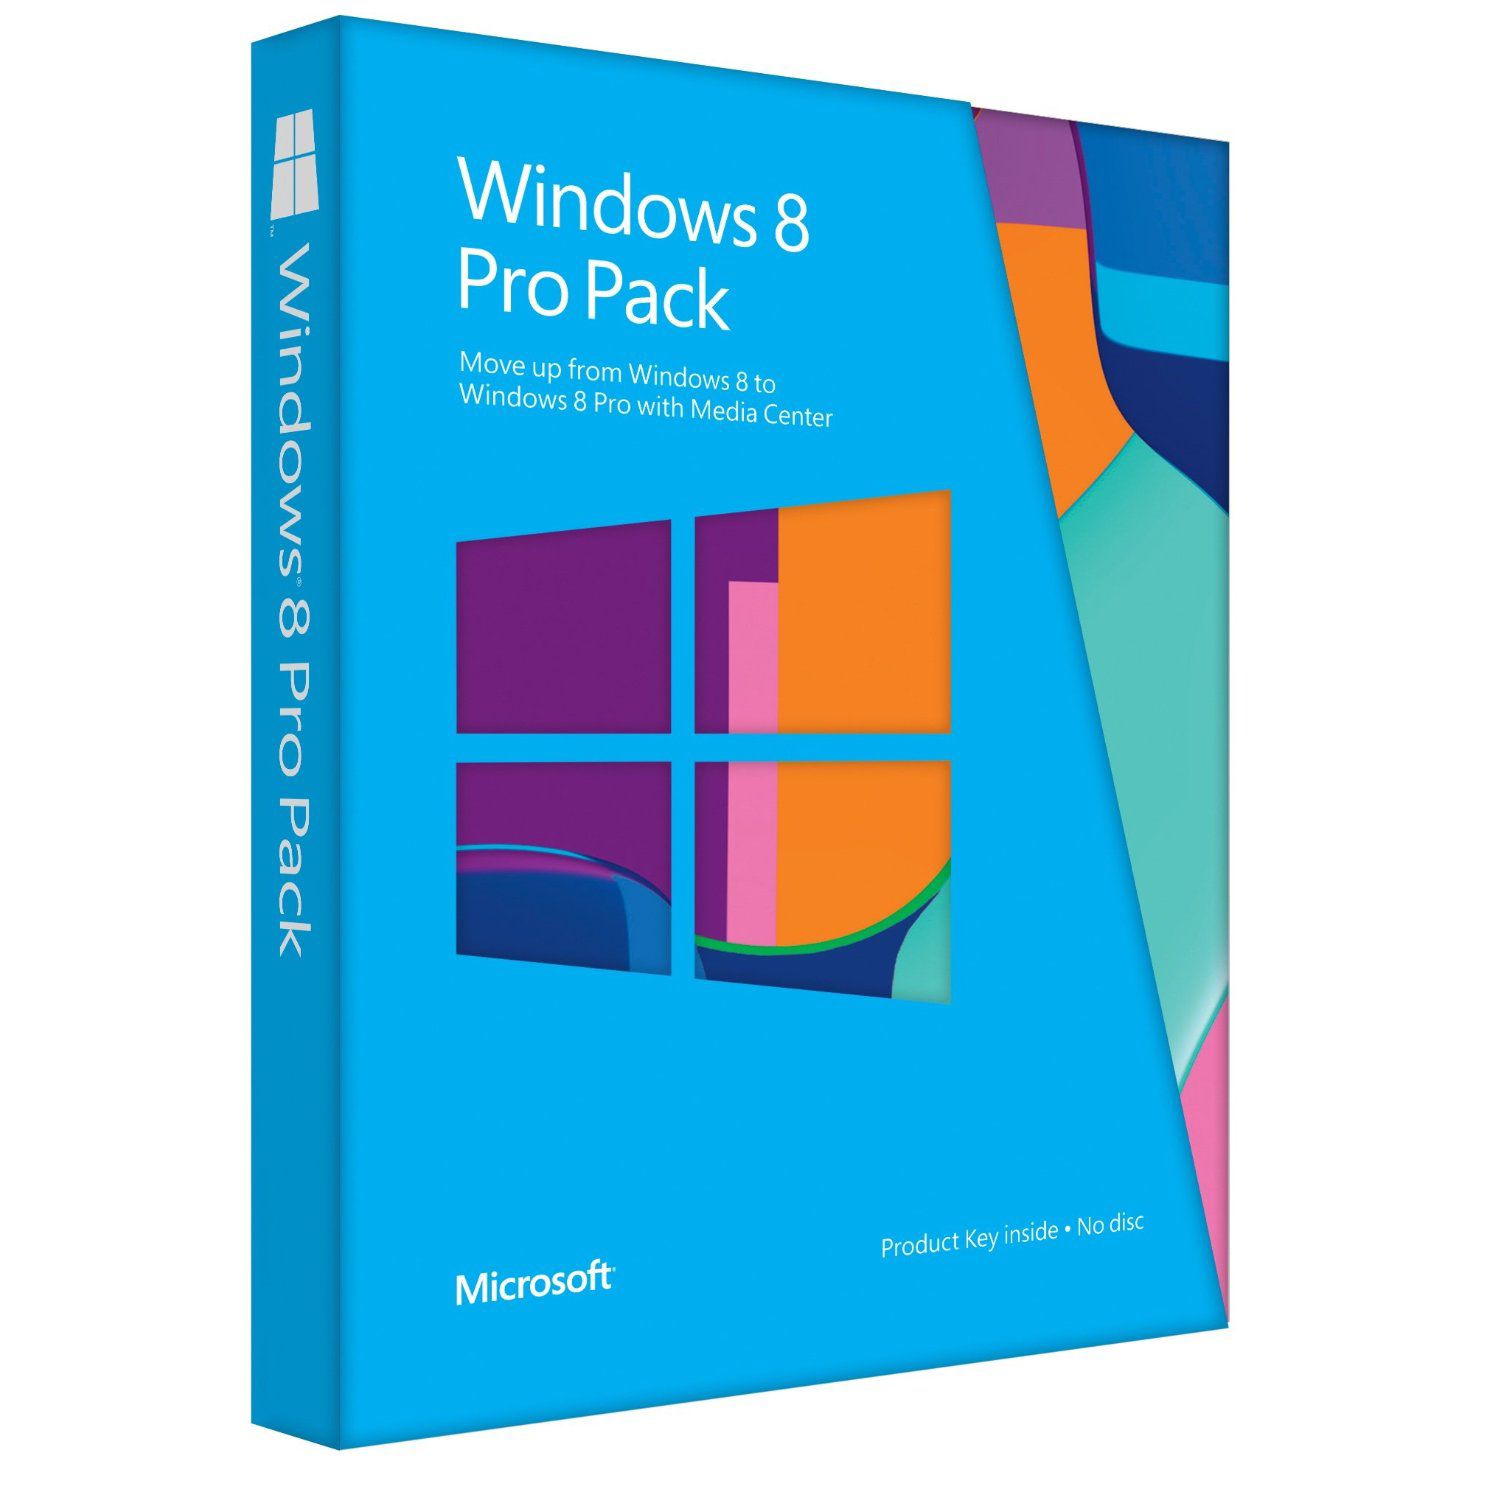 Microsoft Windows 8 Pro Pack 32-bit/64-bit English Product Upgrade